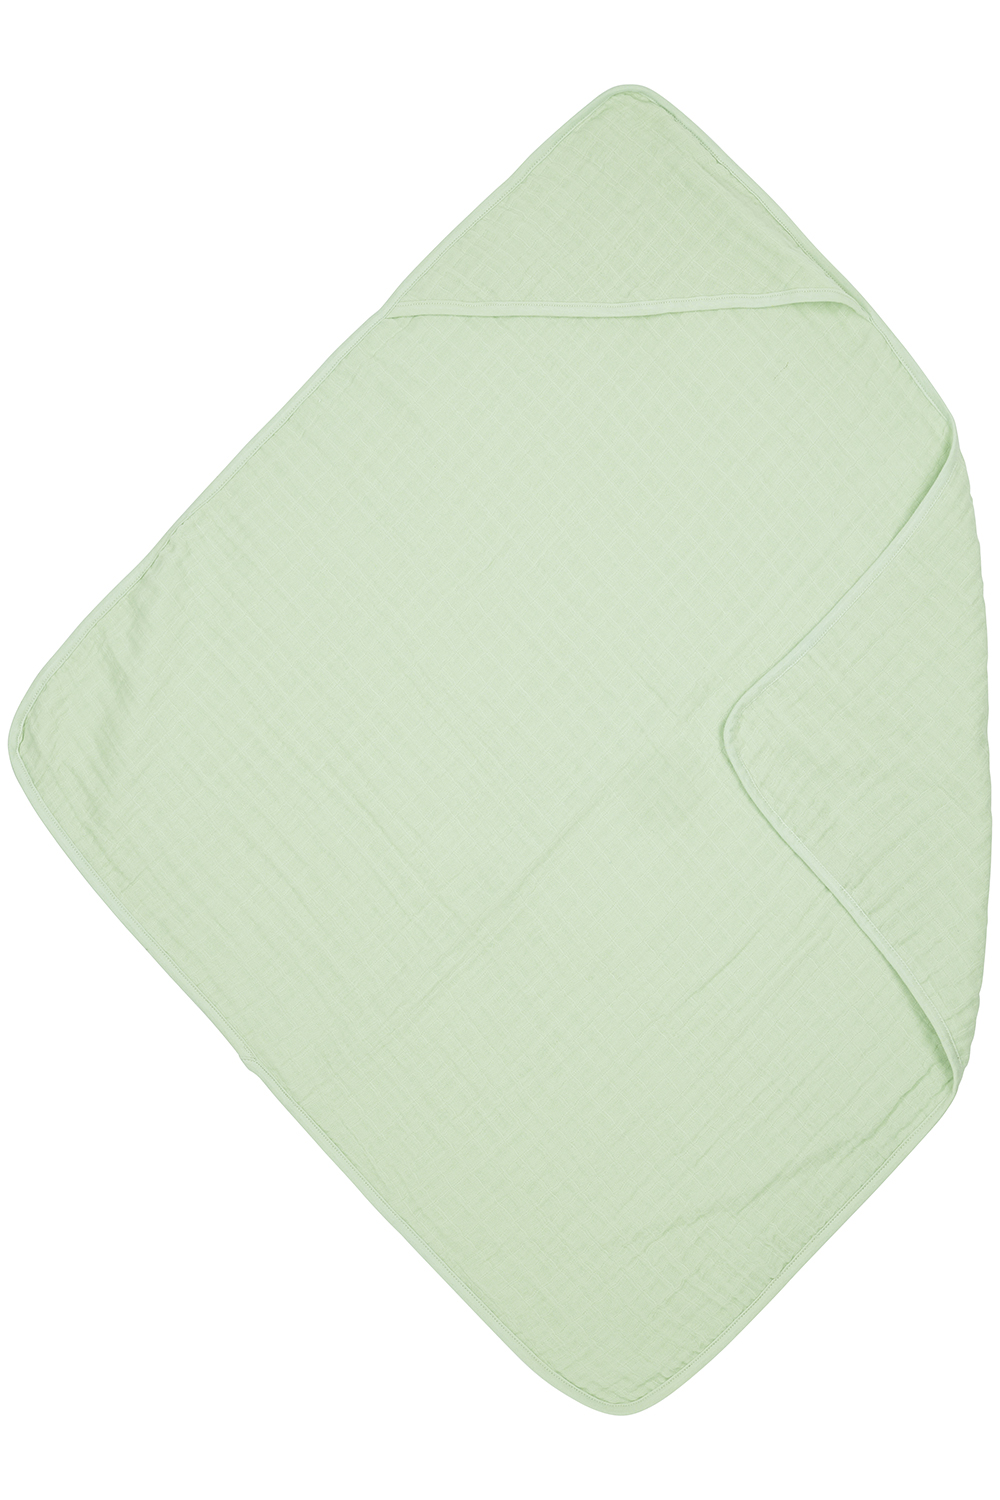 Bathcape muslin Uni - soft green - 80x80cm